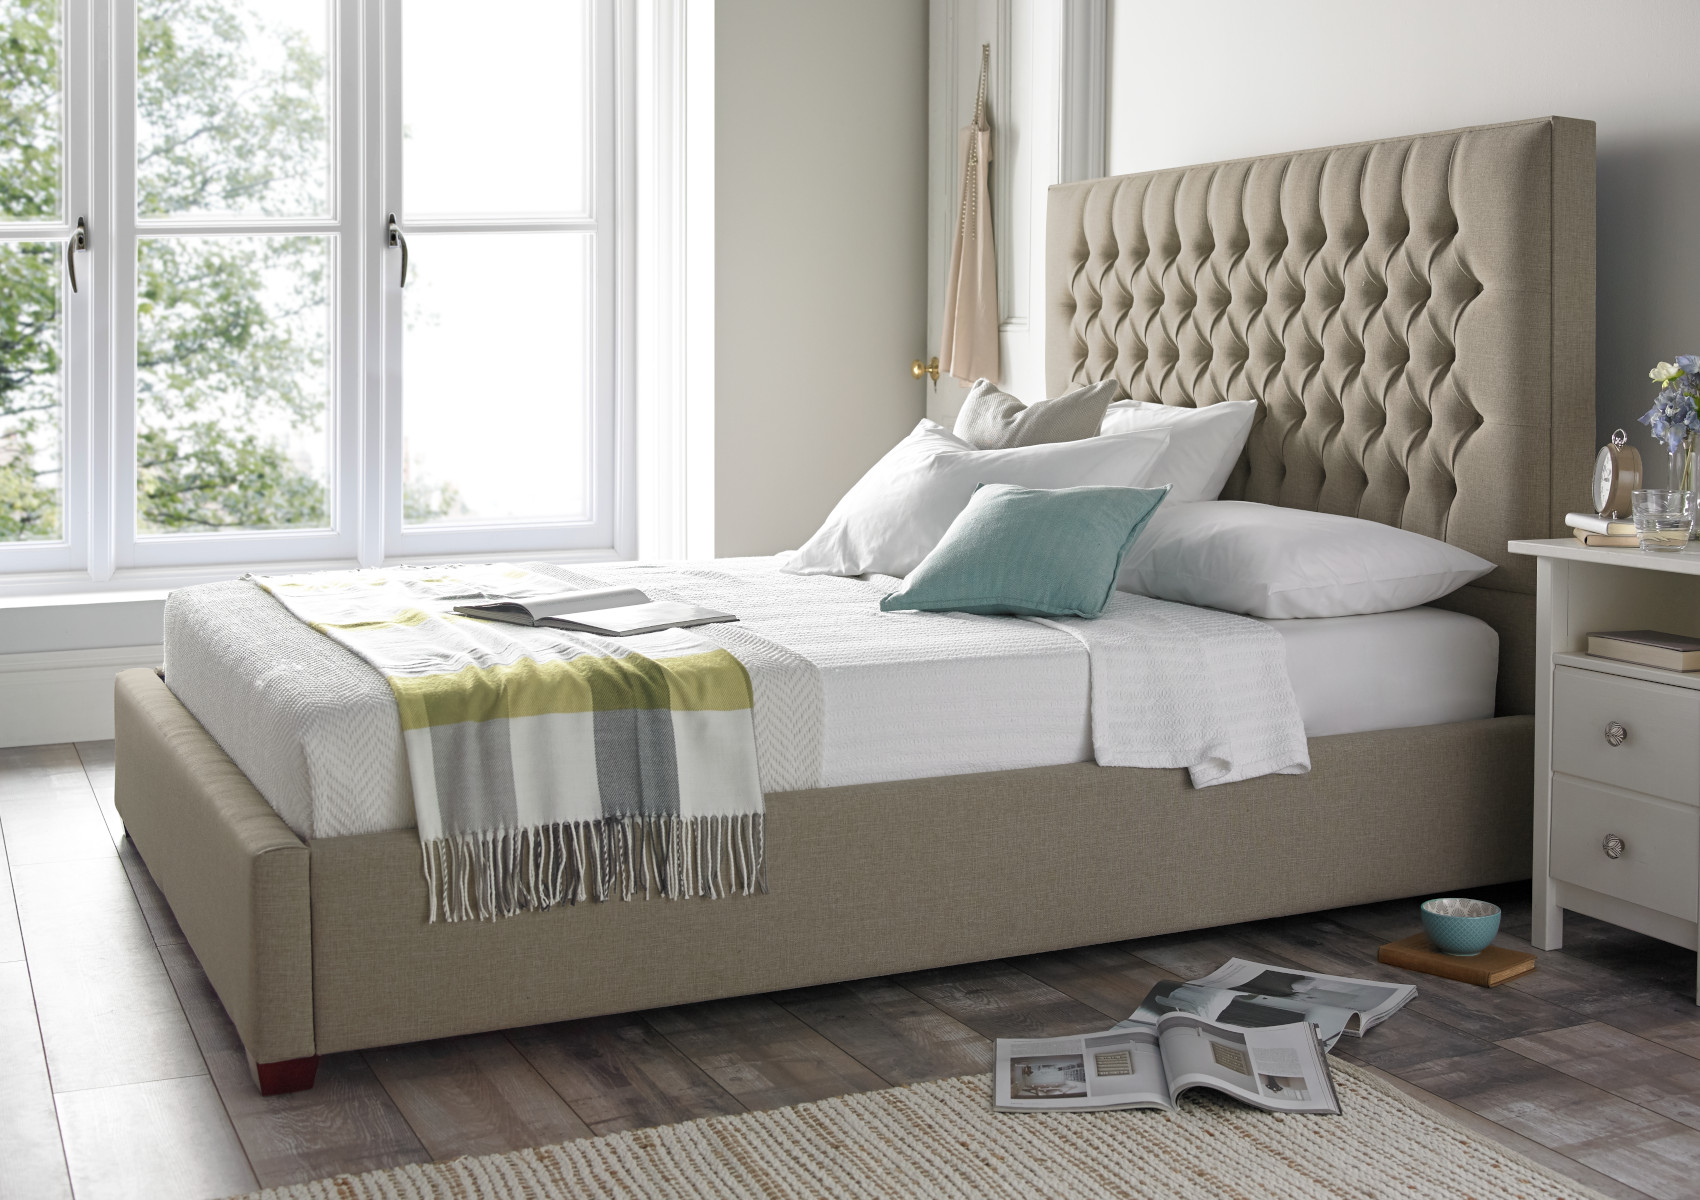 View Belgravia Shetland Mercury Upholstered Double Bed Time4Sleep information